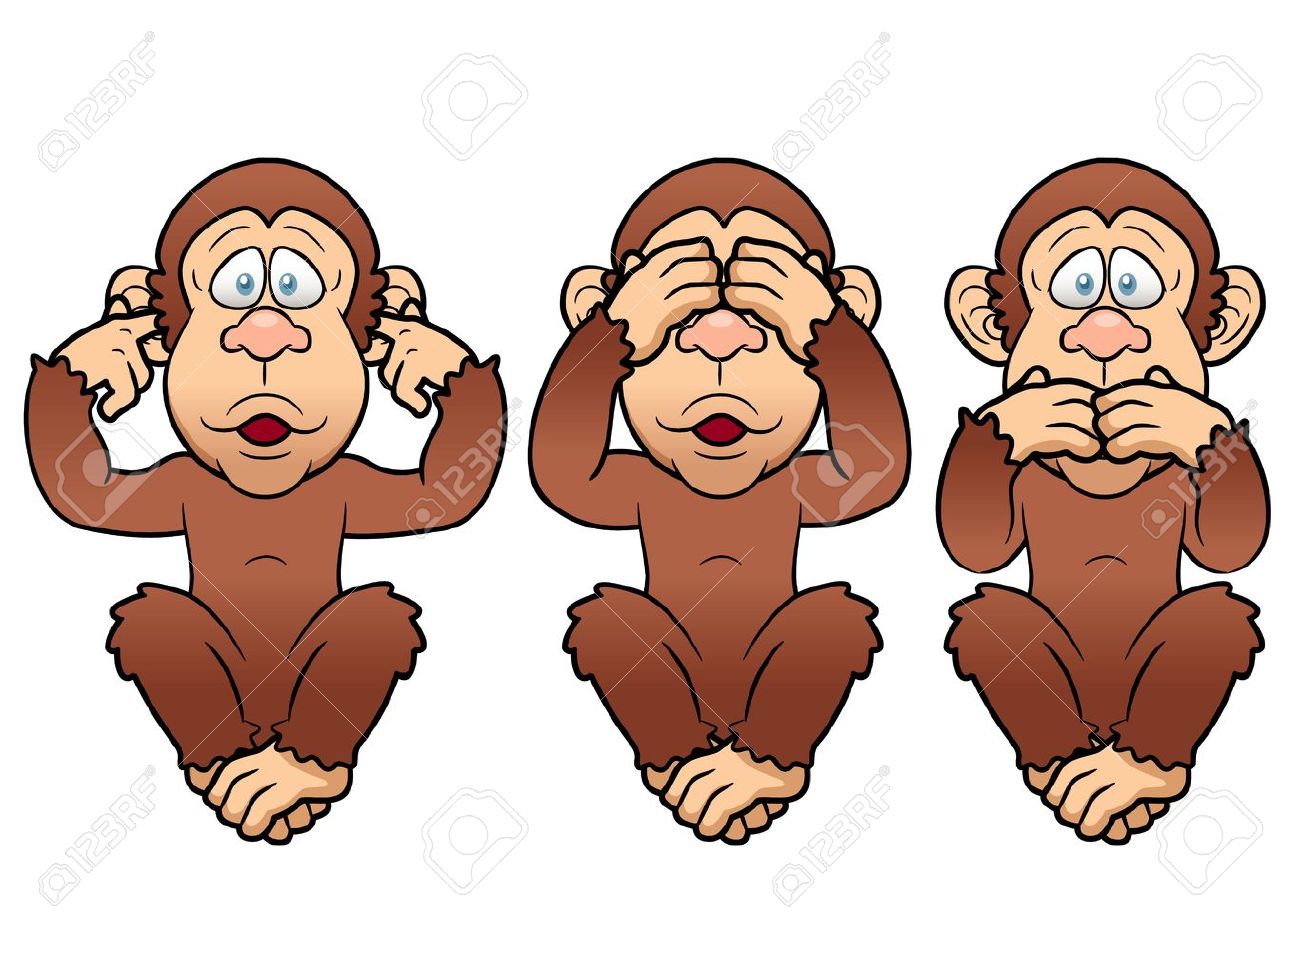 17813655-illustration-of-cartoon-three-monkeys-see-hear-speak-no-evil.jpg